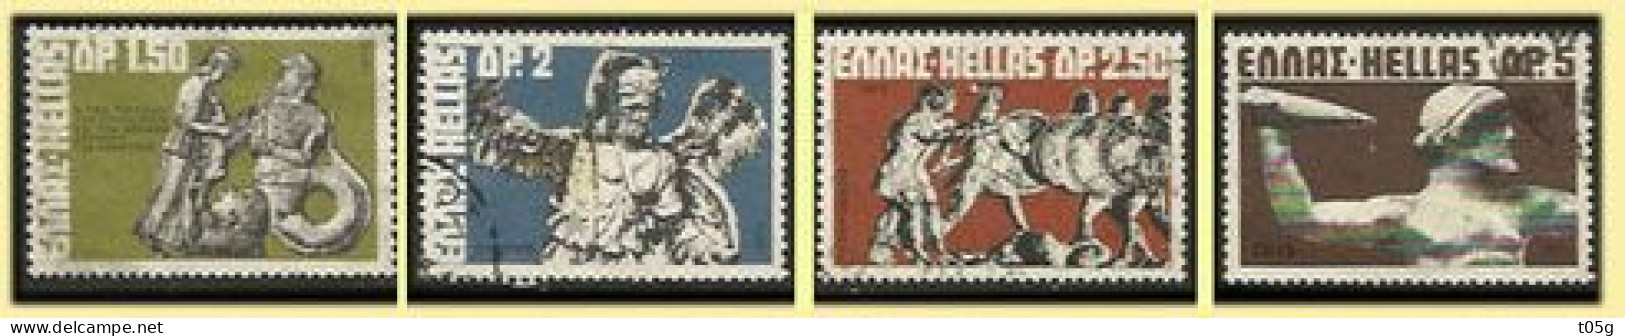 GREECE- GRECE  - HELLAS 1972: " Mythology A"  (complet Strips, Se-tenant 4 Stamps) Compl. Set Used - Gebraucht